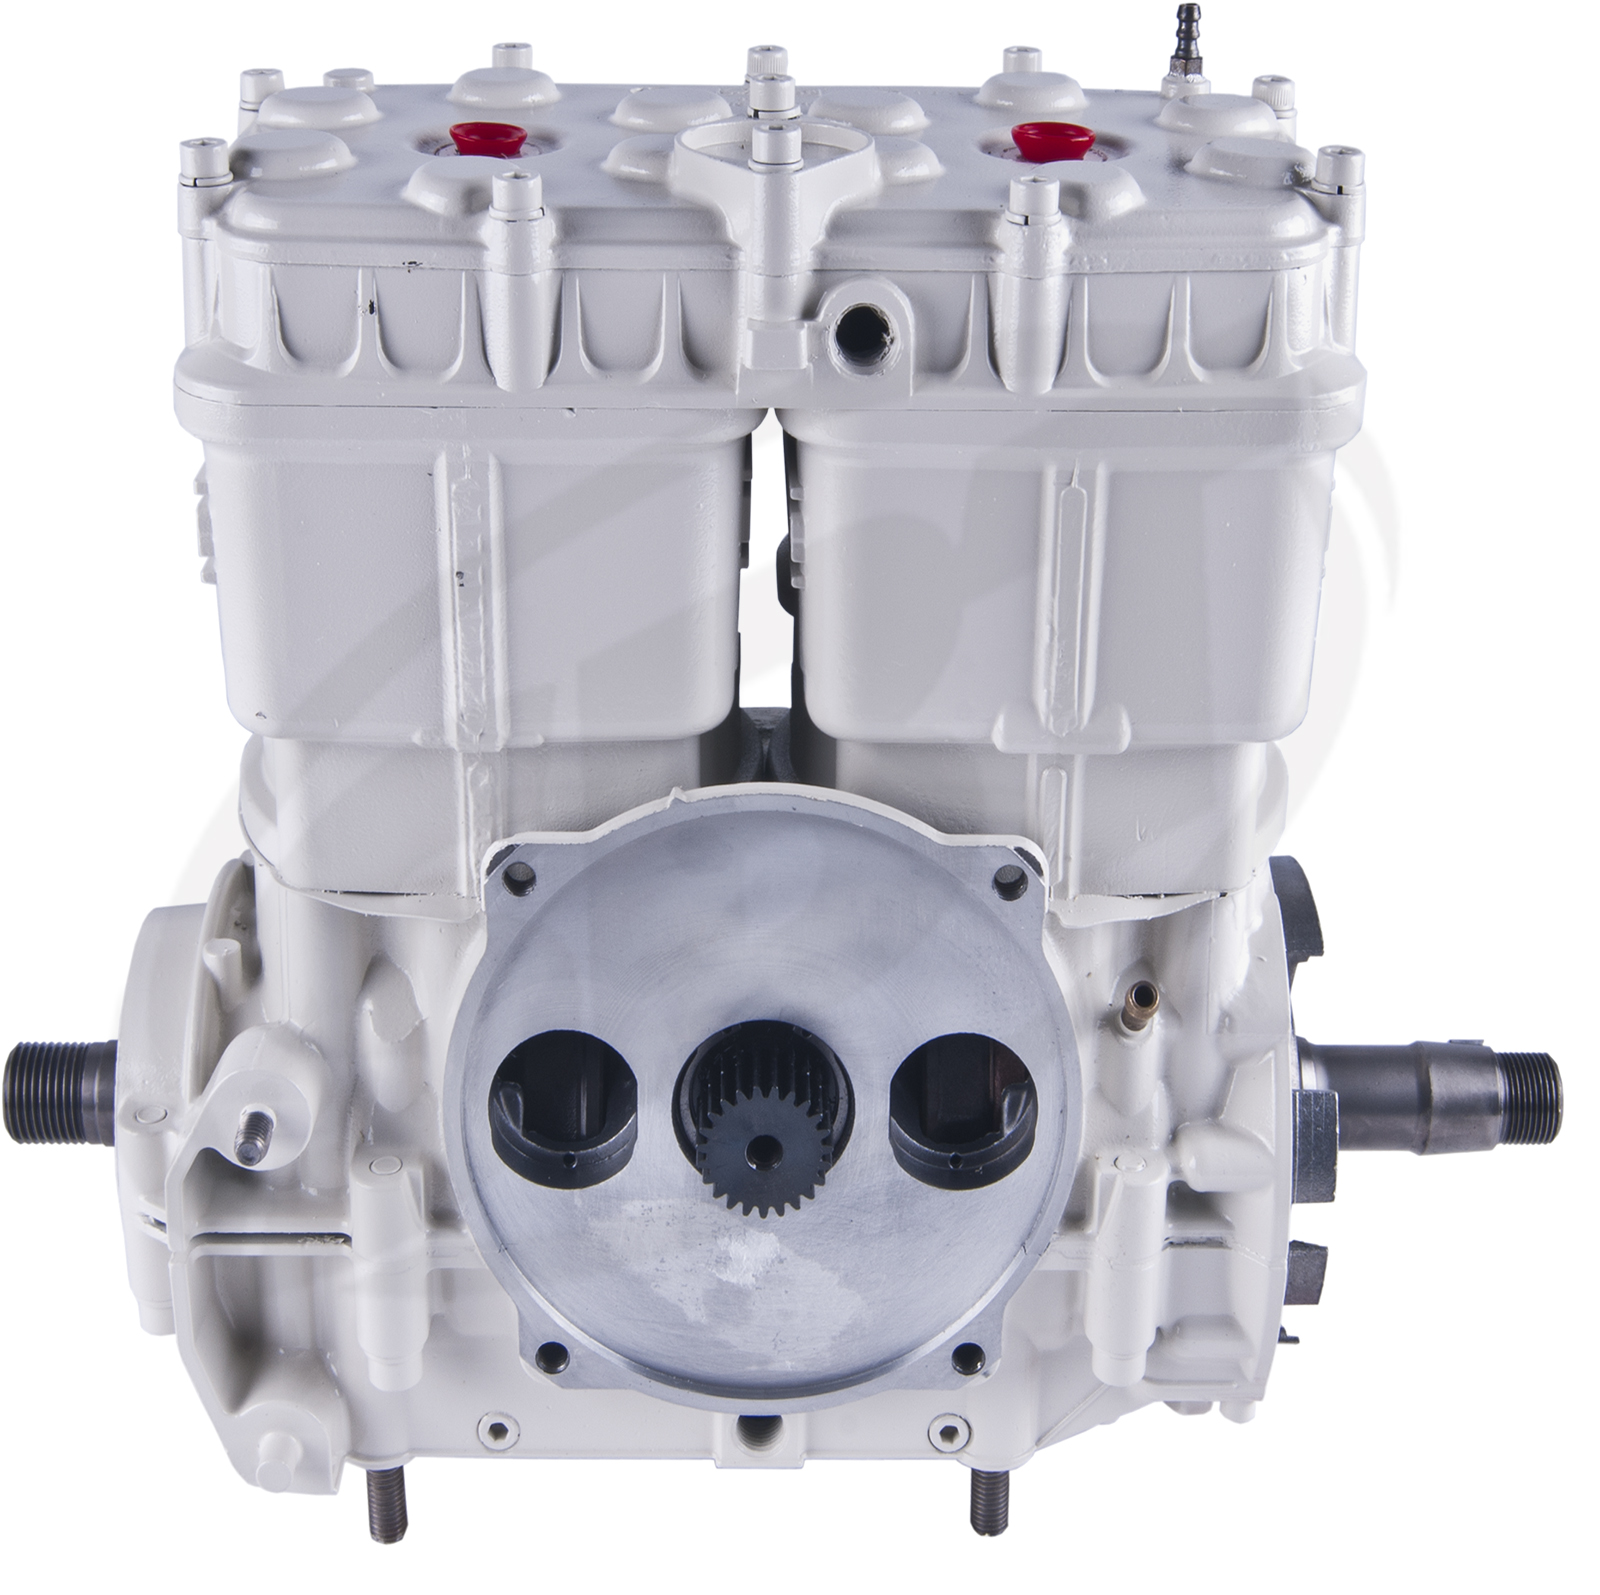 Engine for Sea-Doo 587 White XP /SPX /SP /SPI /GTS /GTX 1992-1996